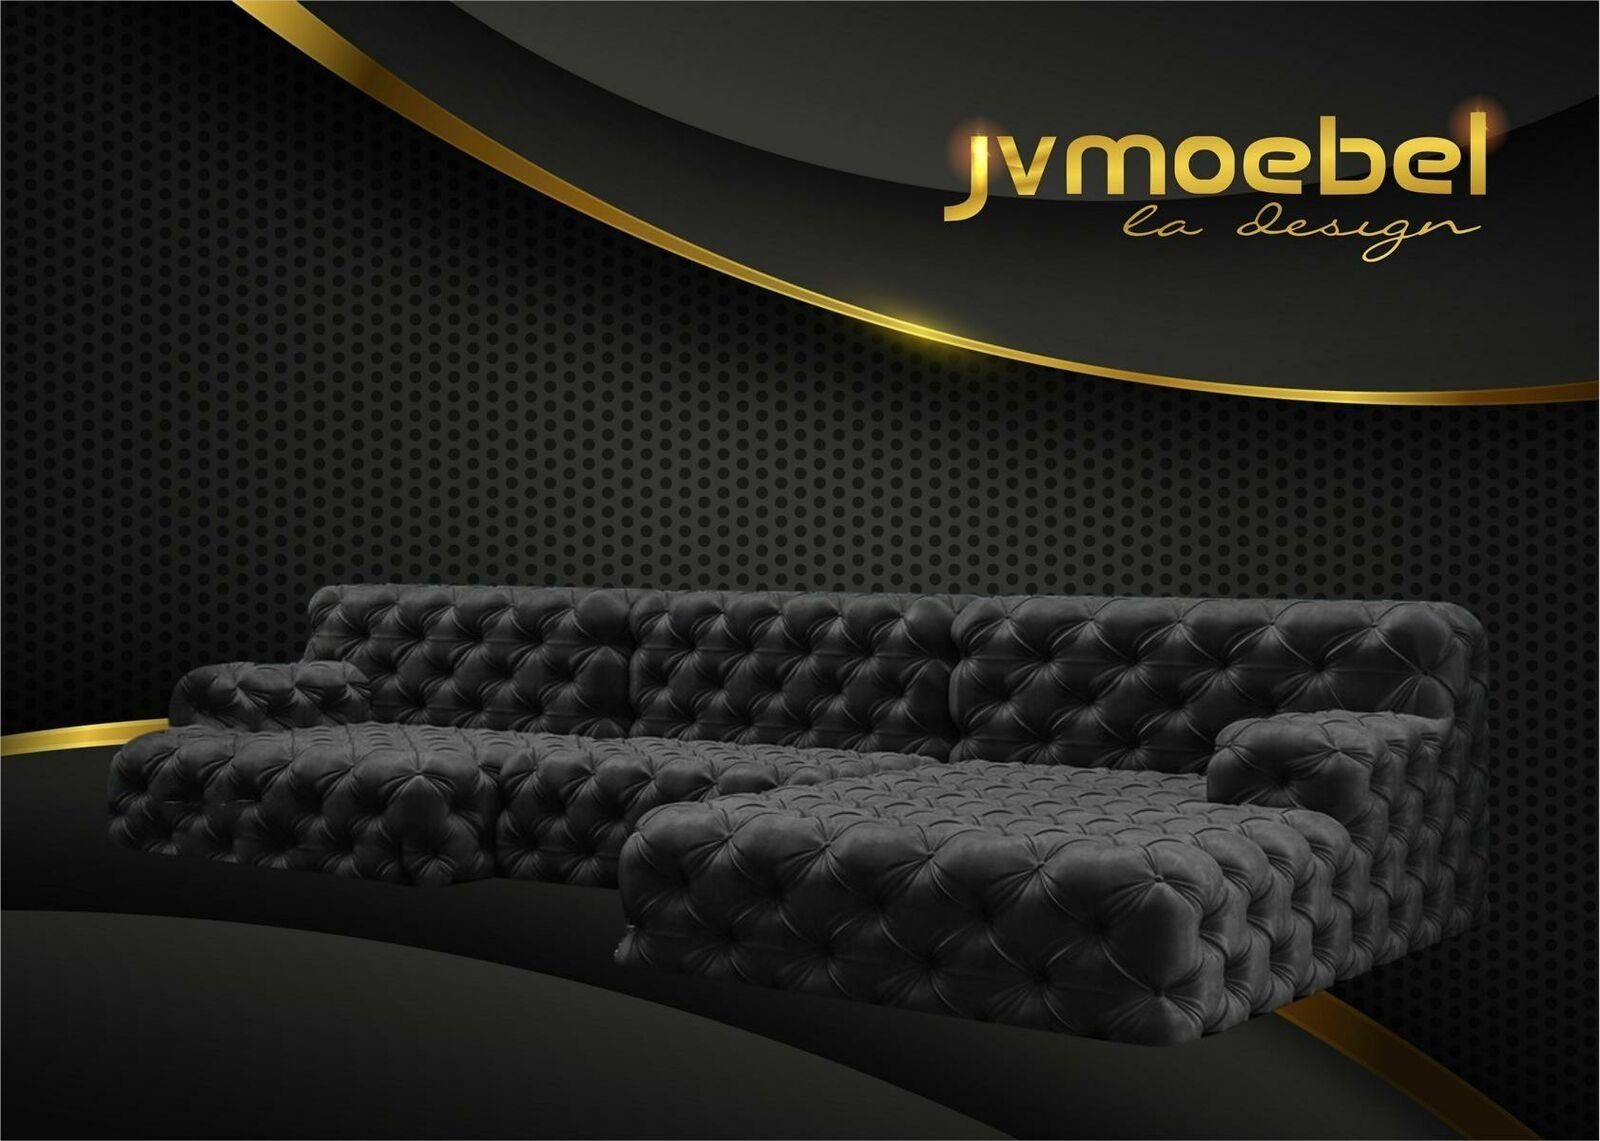 JVmoebel Ecksofa, Chesterfield U-Form Ecksofa Couch Design Polster Textil Garnitur Schwarz